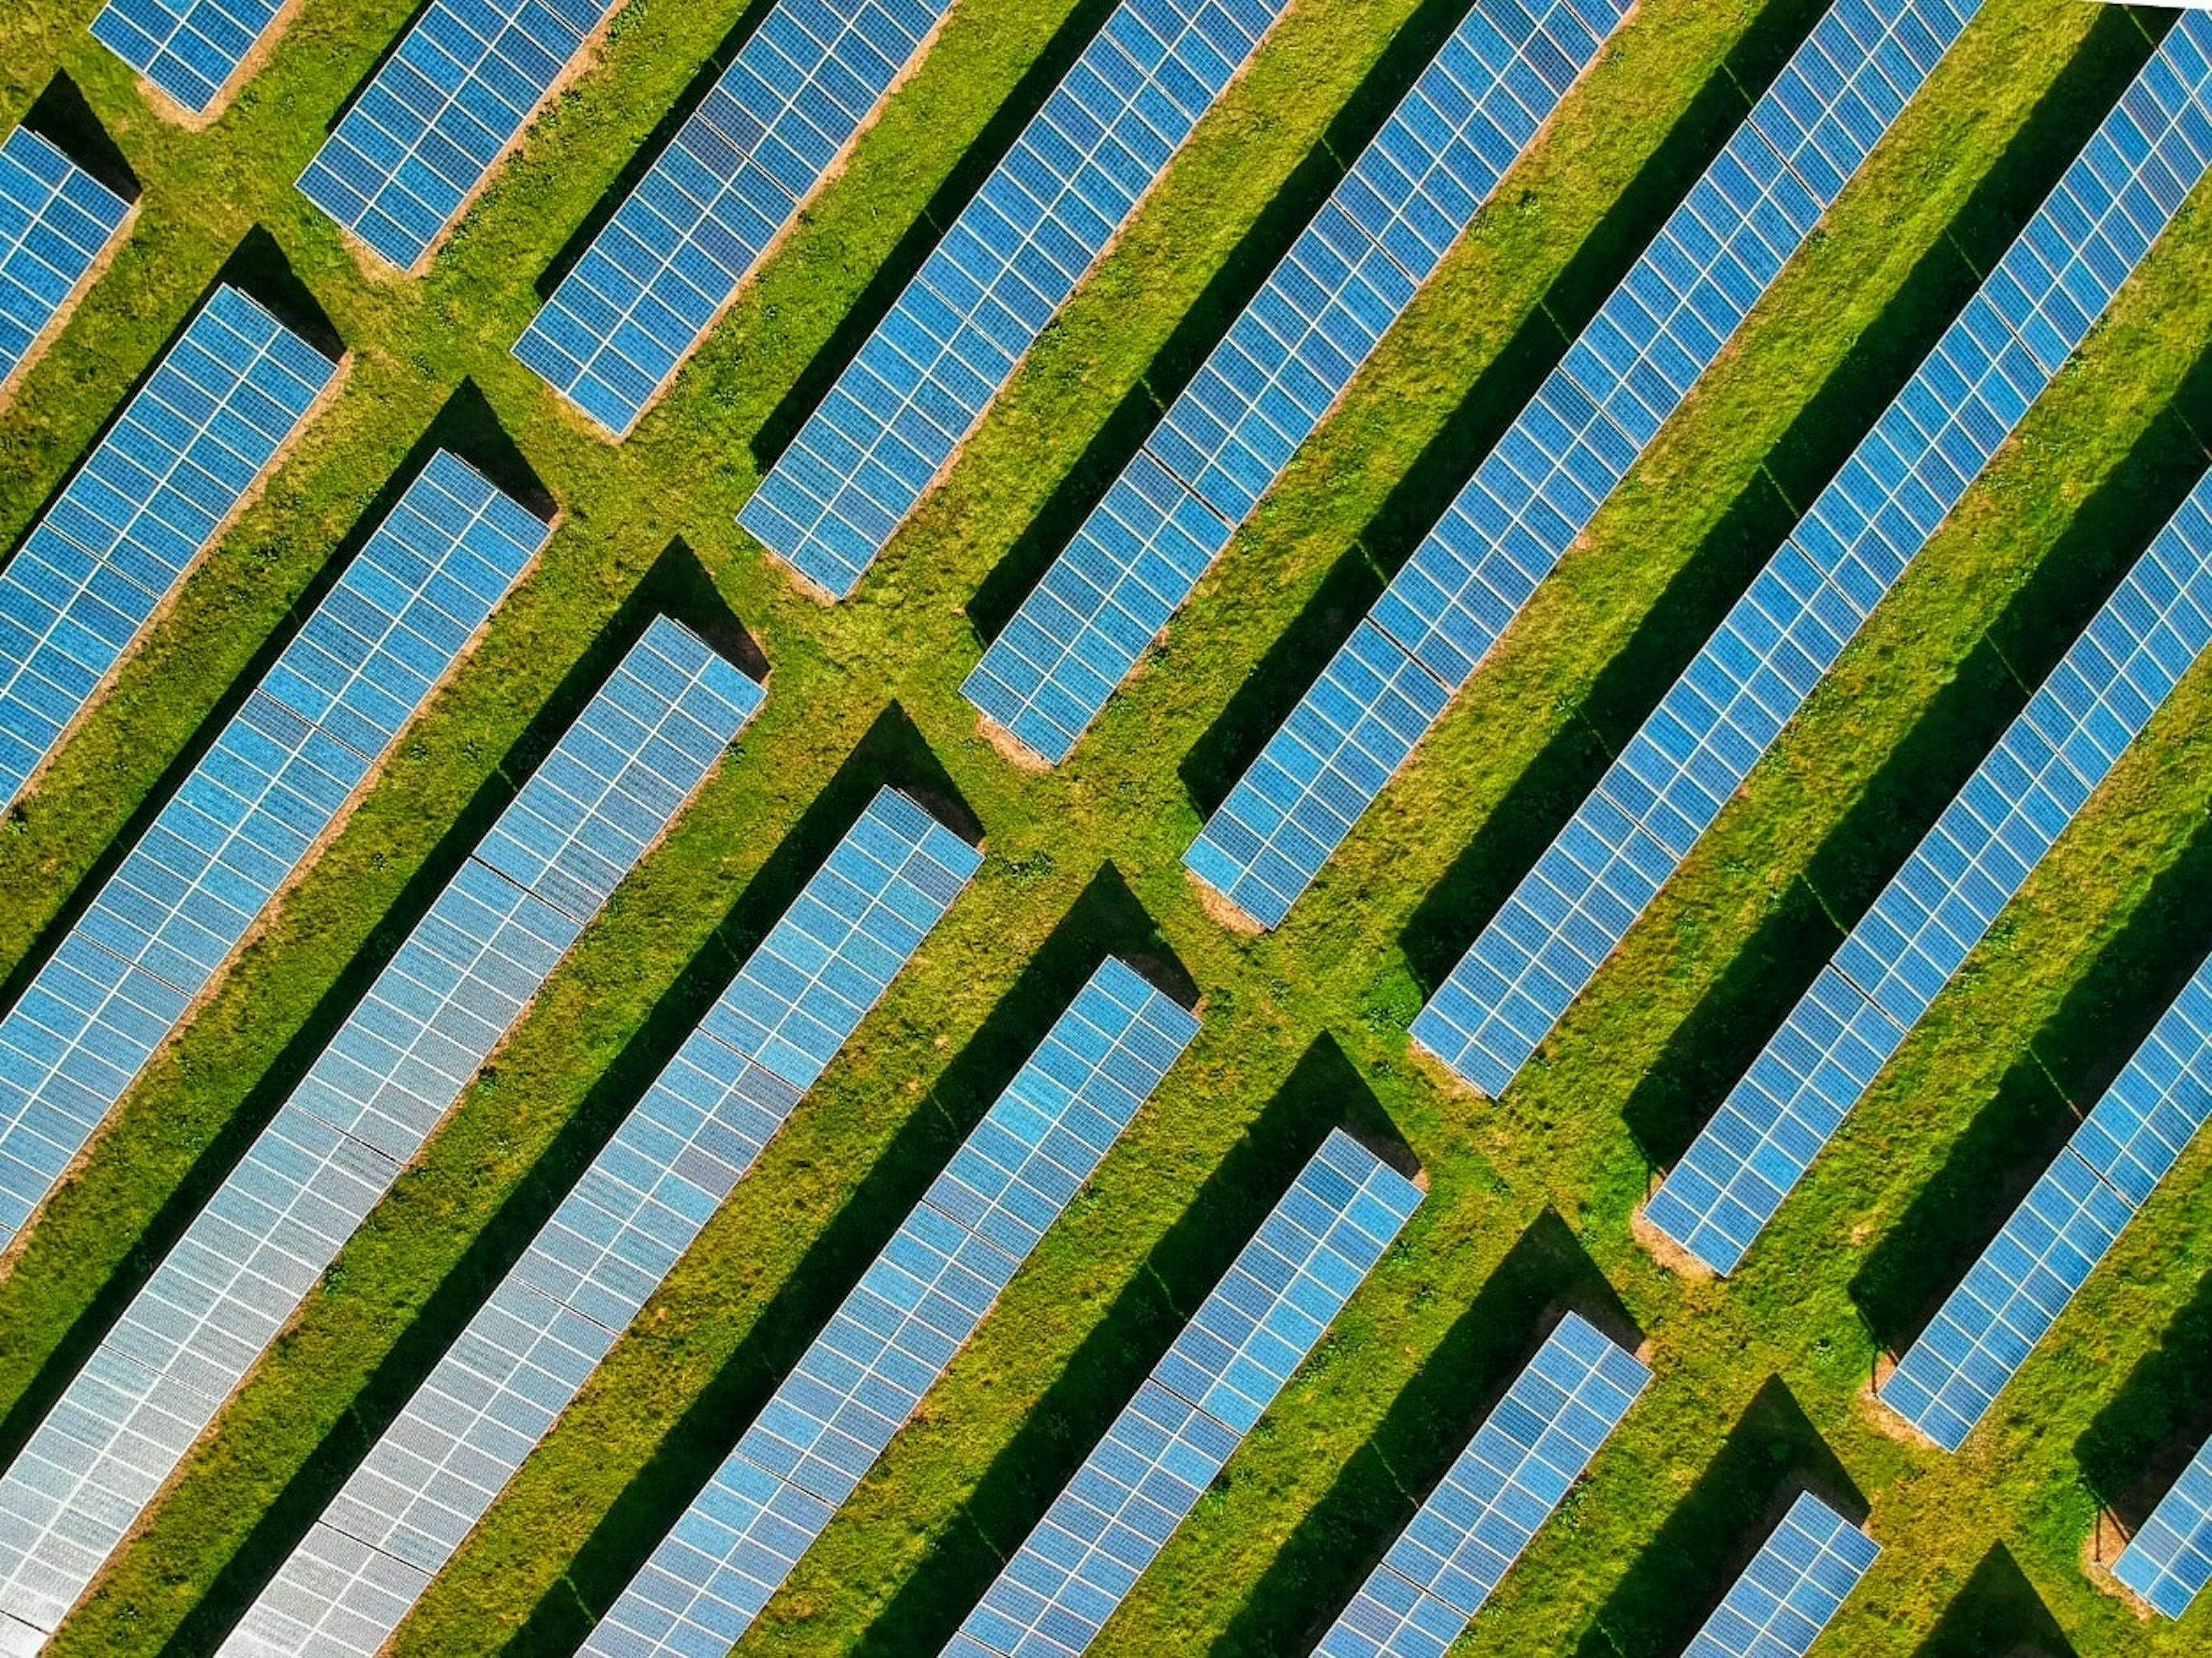 Image of a solar farm